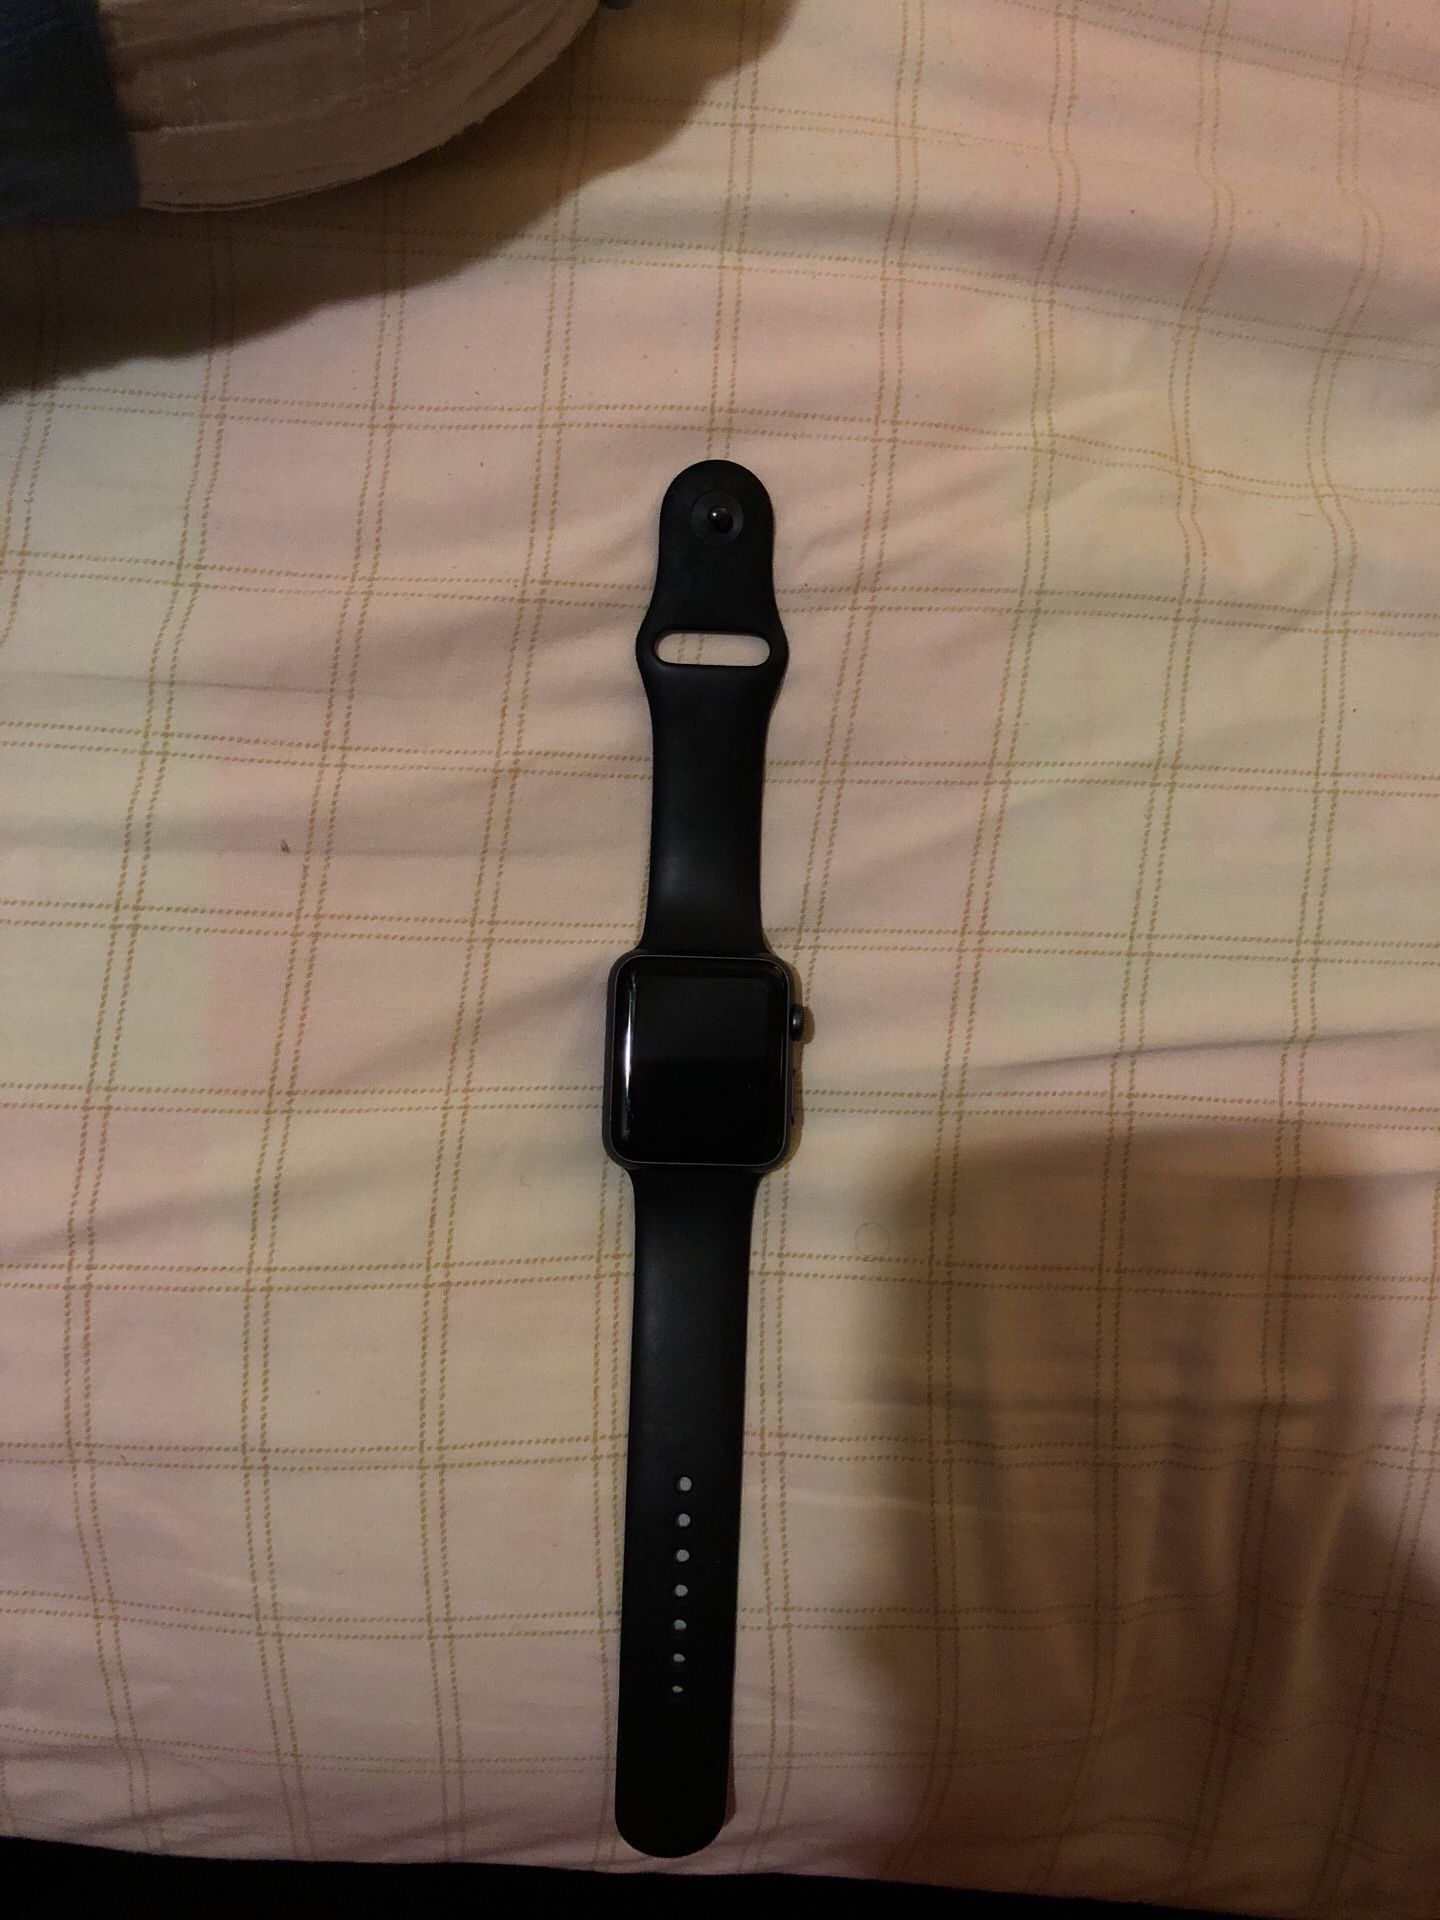 Apple watch series 1 good condition